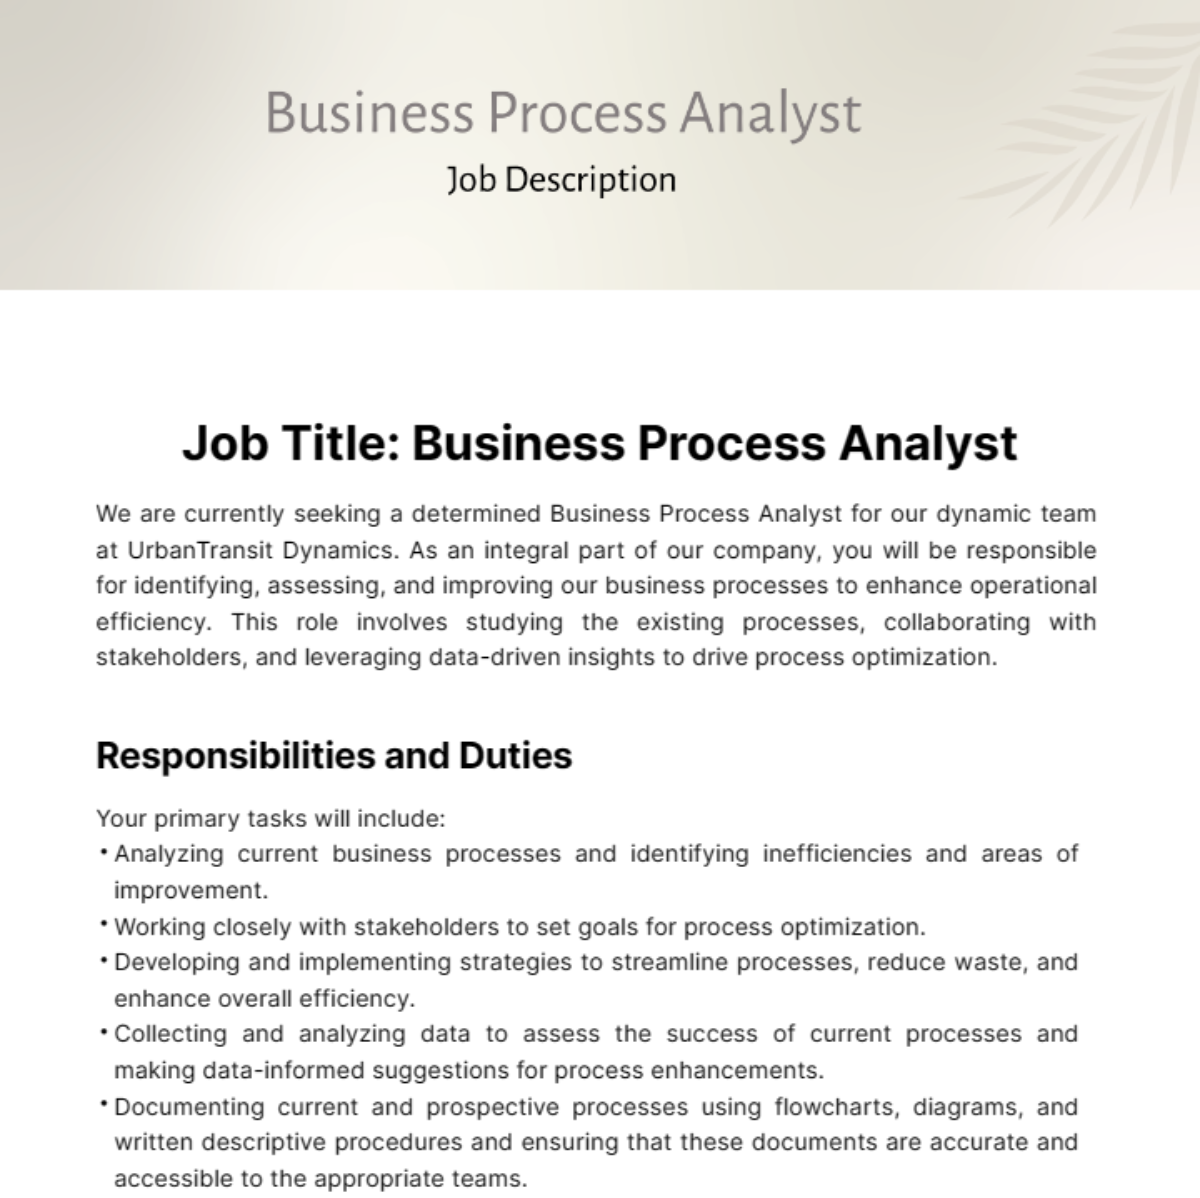 Business Process Analyst Job Description Template